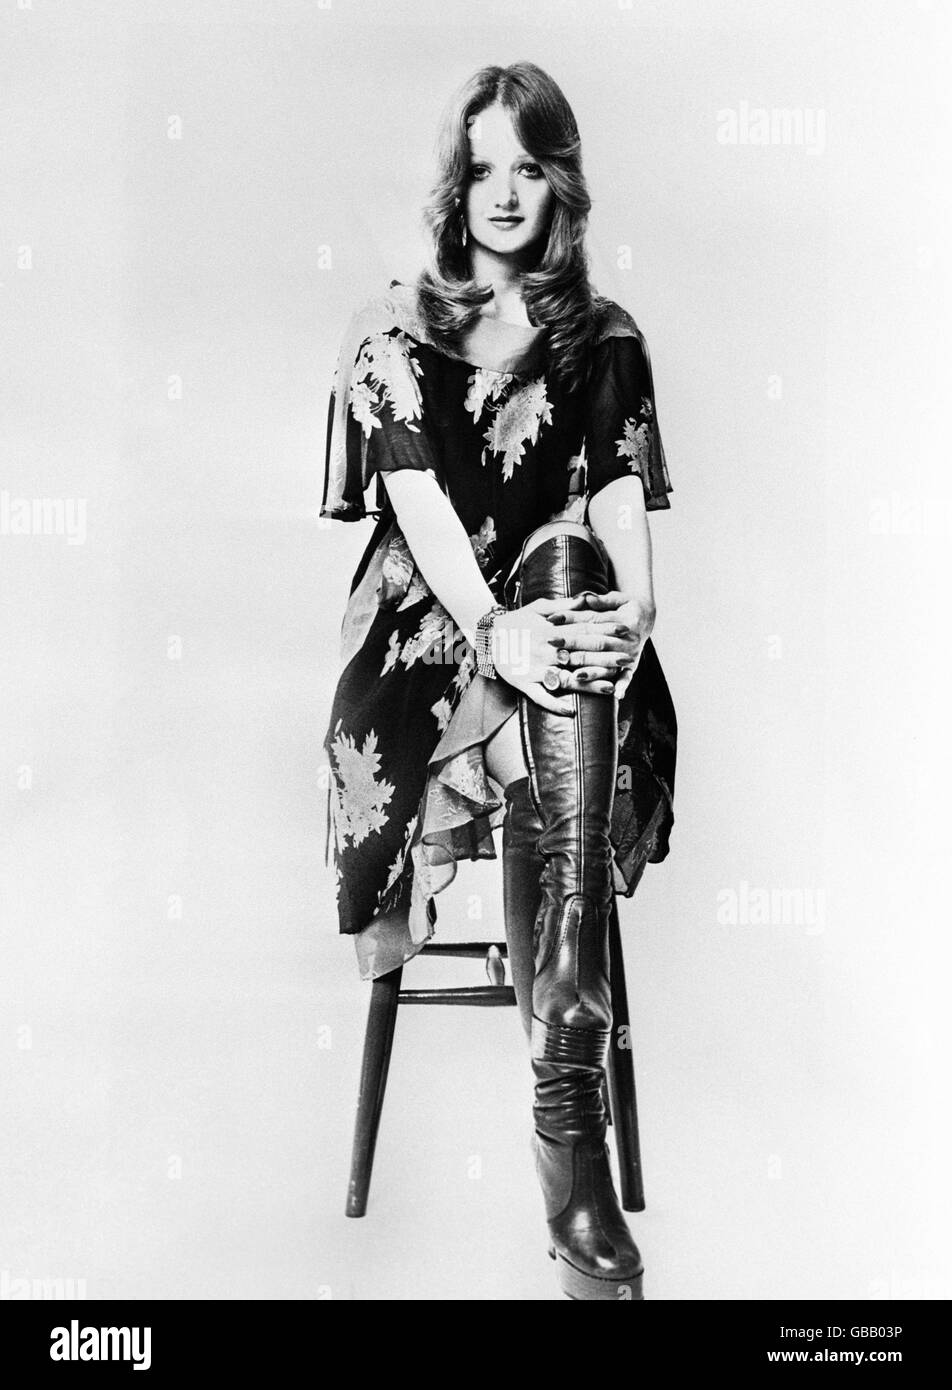 Music - Bonnie Tyler - 1976 Stock Photo